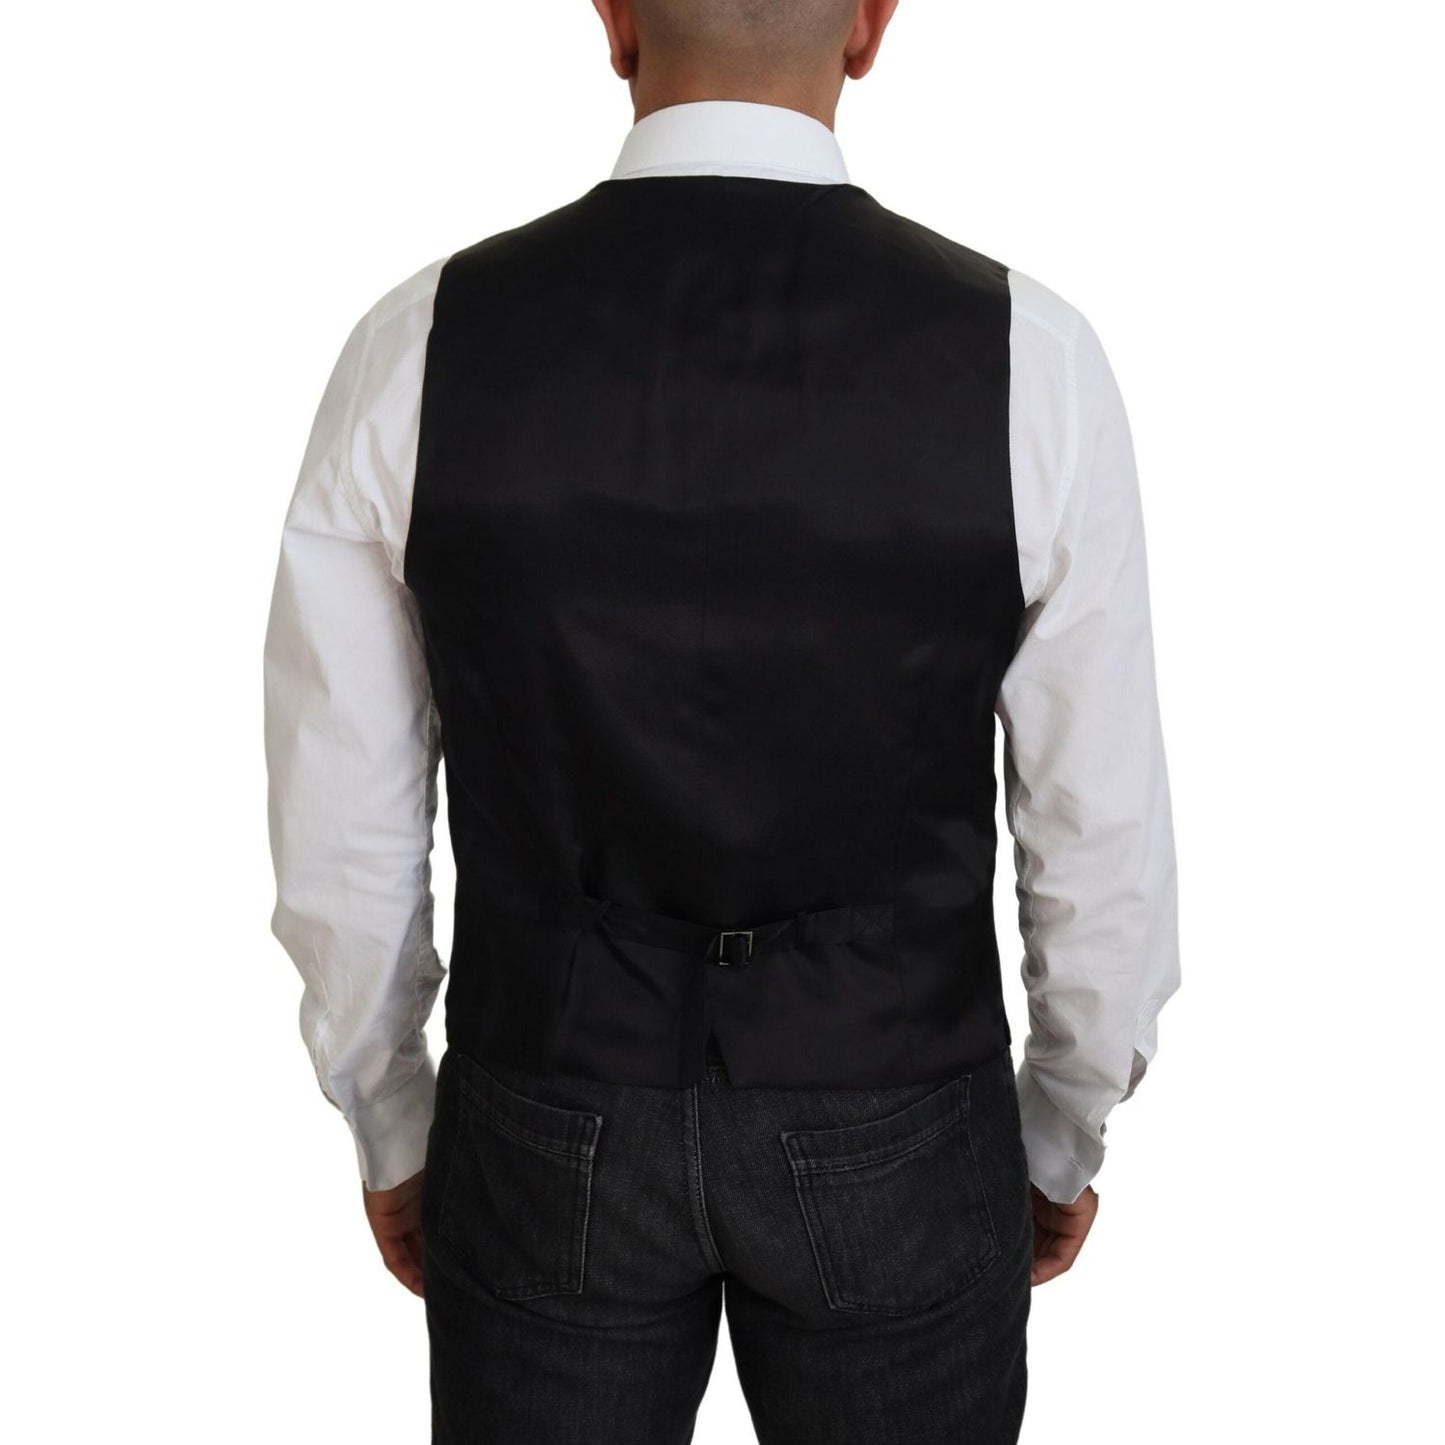 Dolce & Gabbana Elegant Single Breasted Formal Vest black-virgin-wool-waistcoat-formal-vest-1